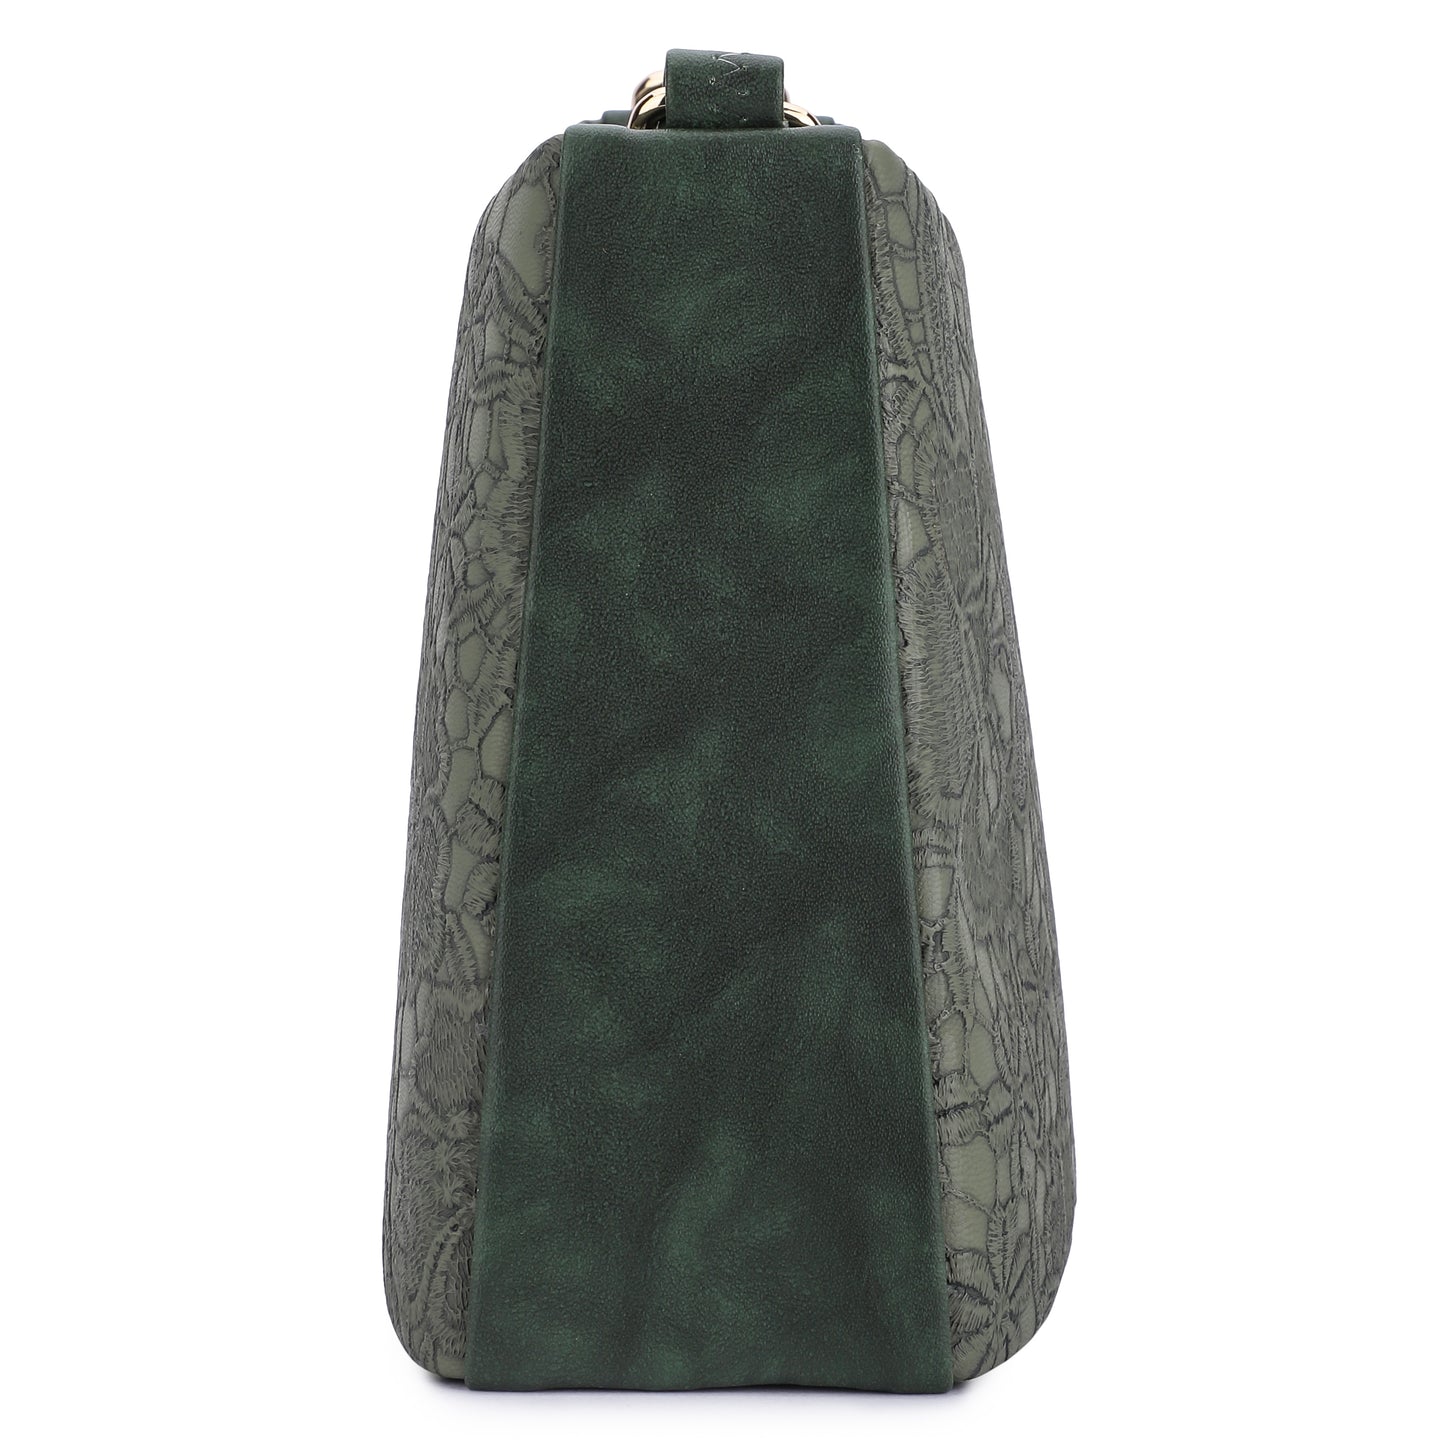 Feman Ethnic Essence Sling Bags - Green